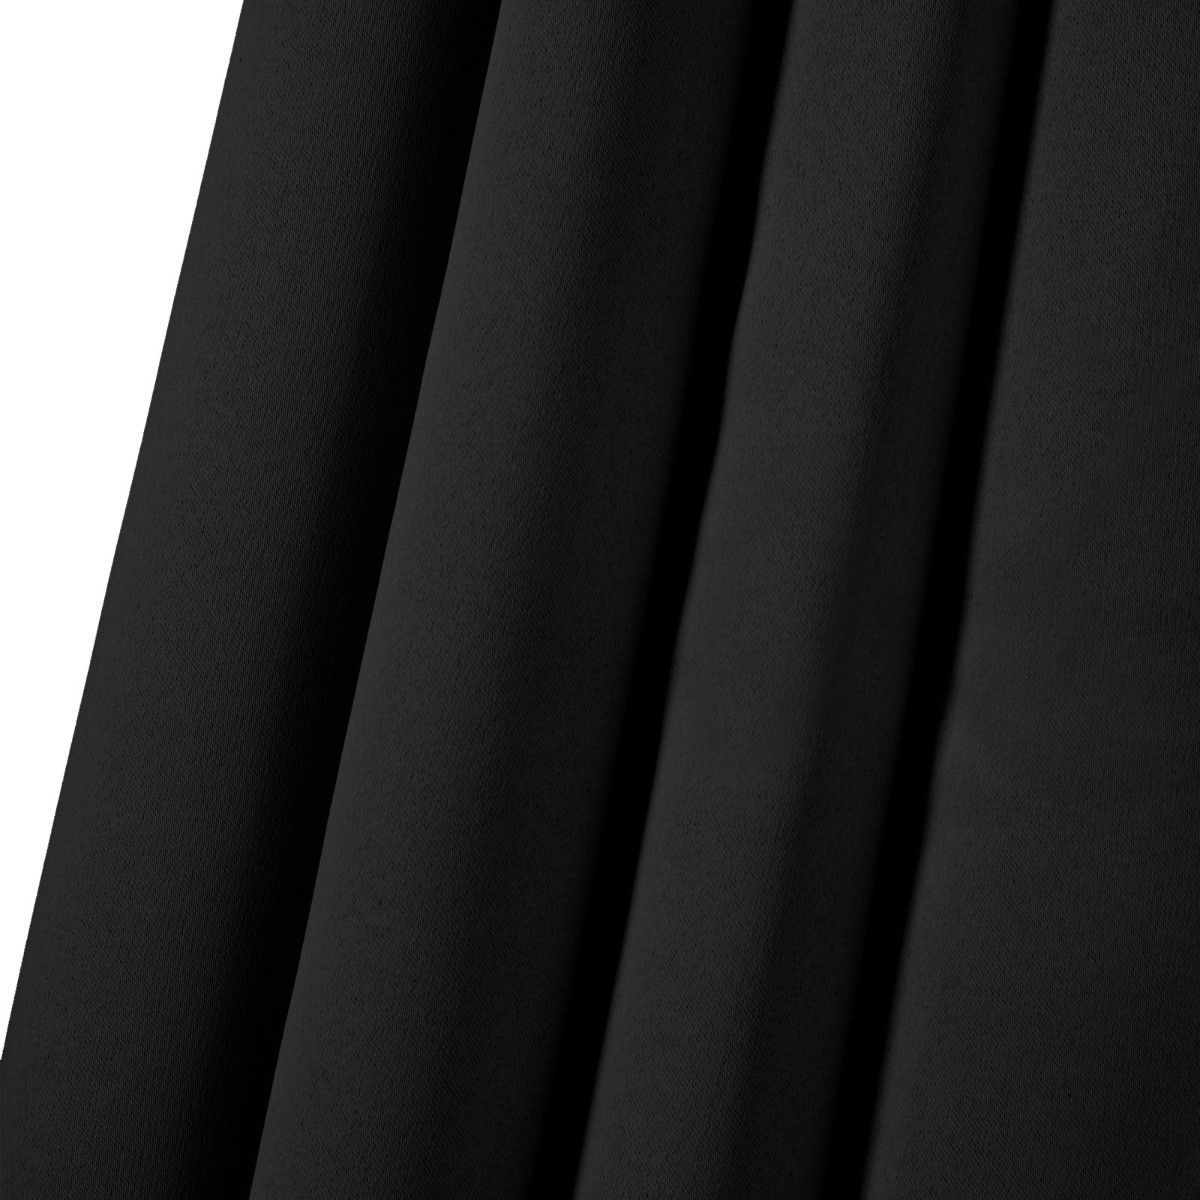 Dreamscene Eyelet Blackout Curtains - Black, 46" X 54">